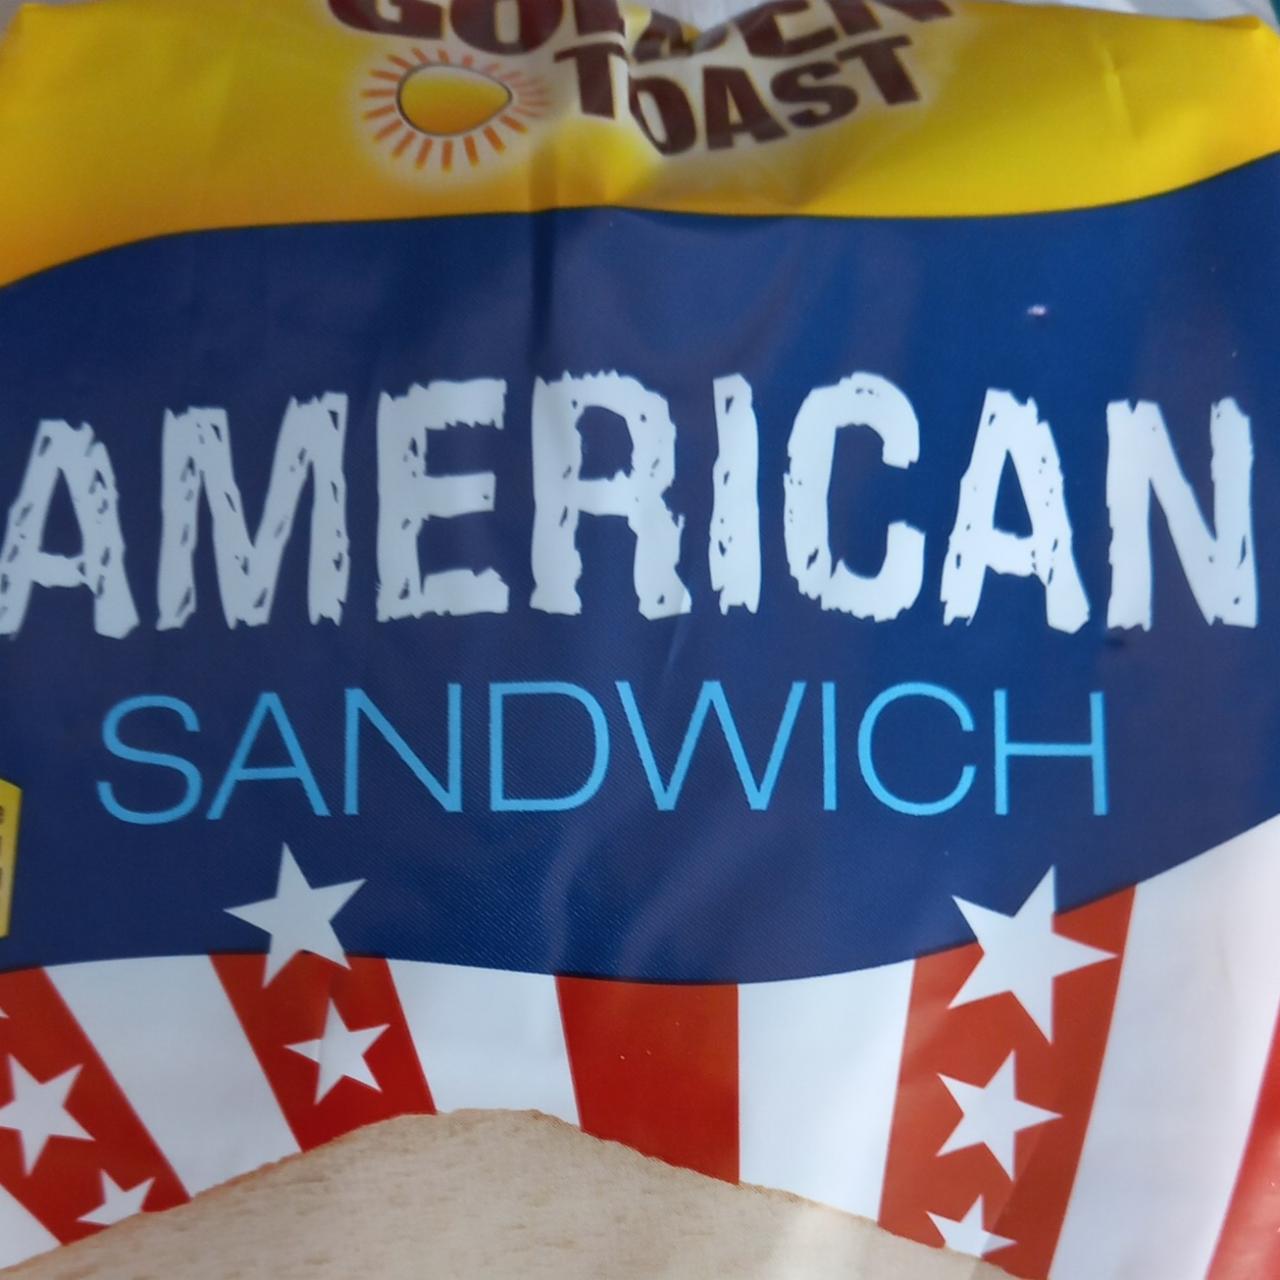 Fotografie - American sandwich Golden Toast